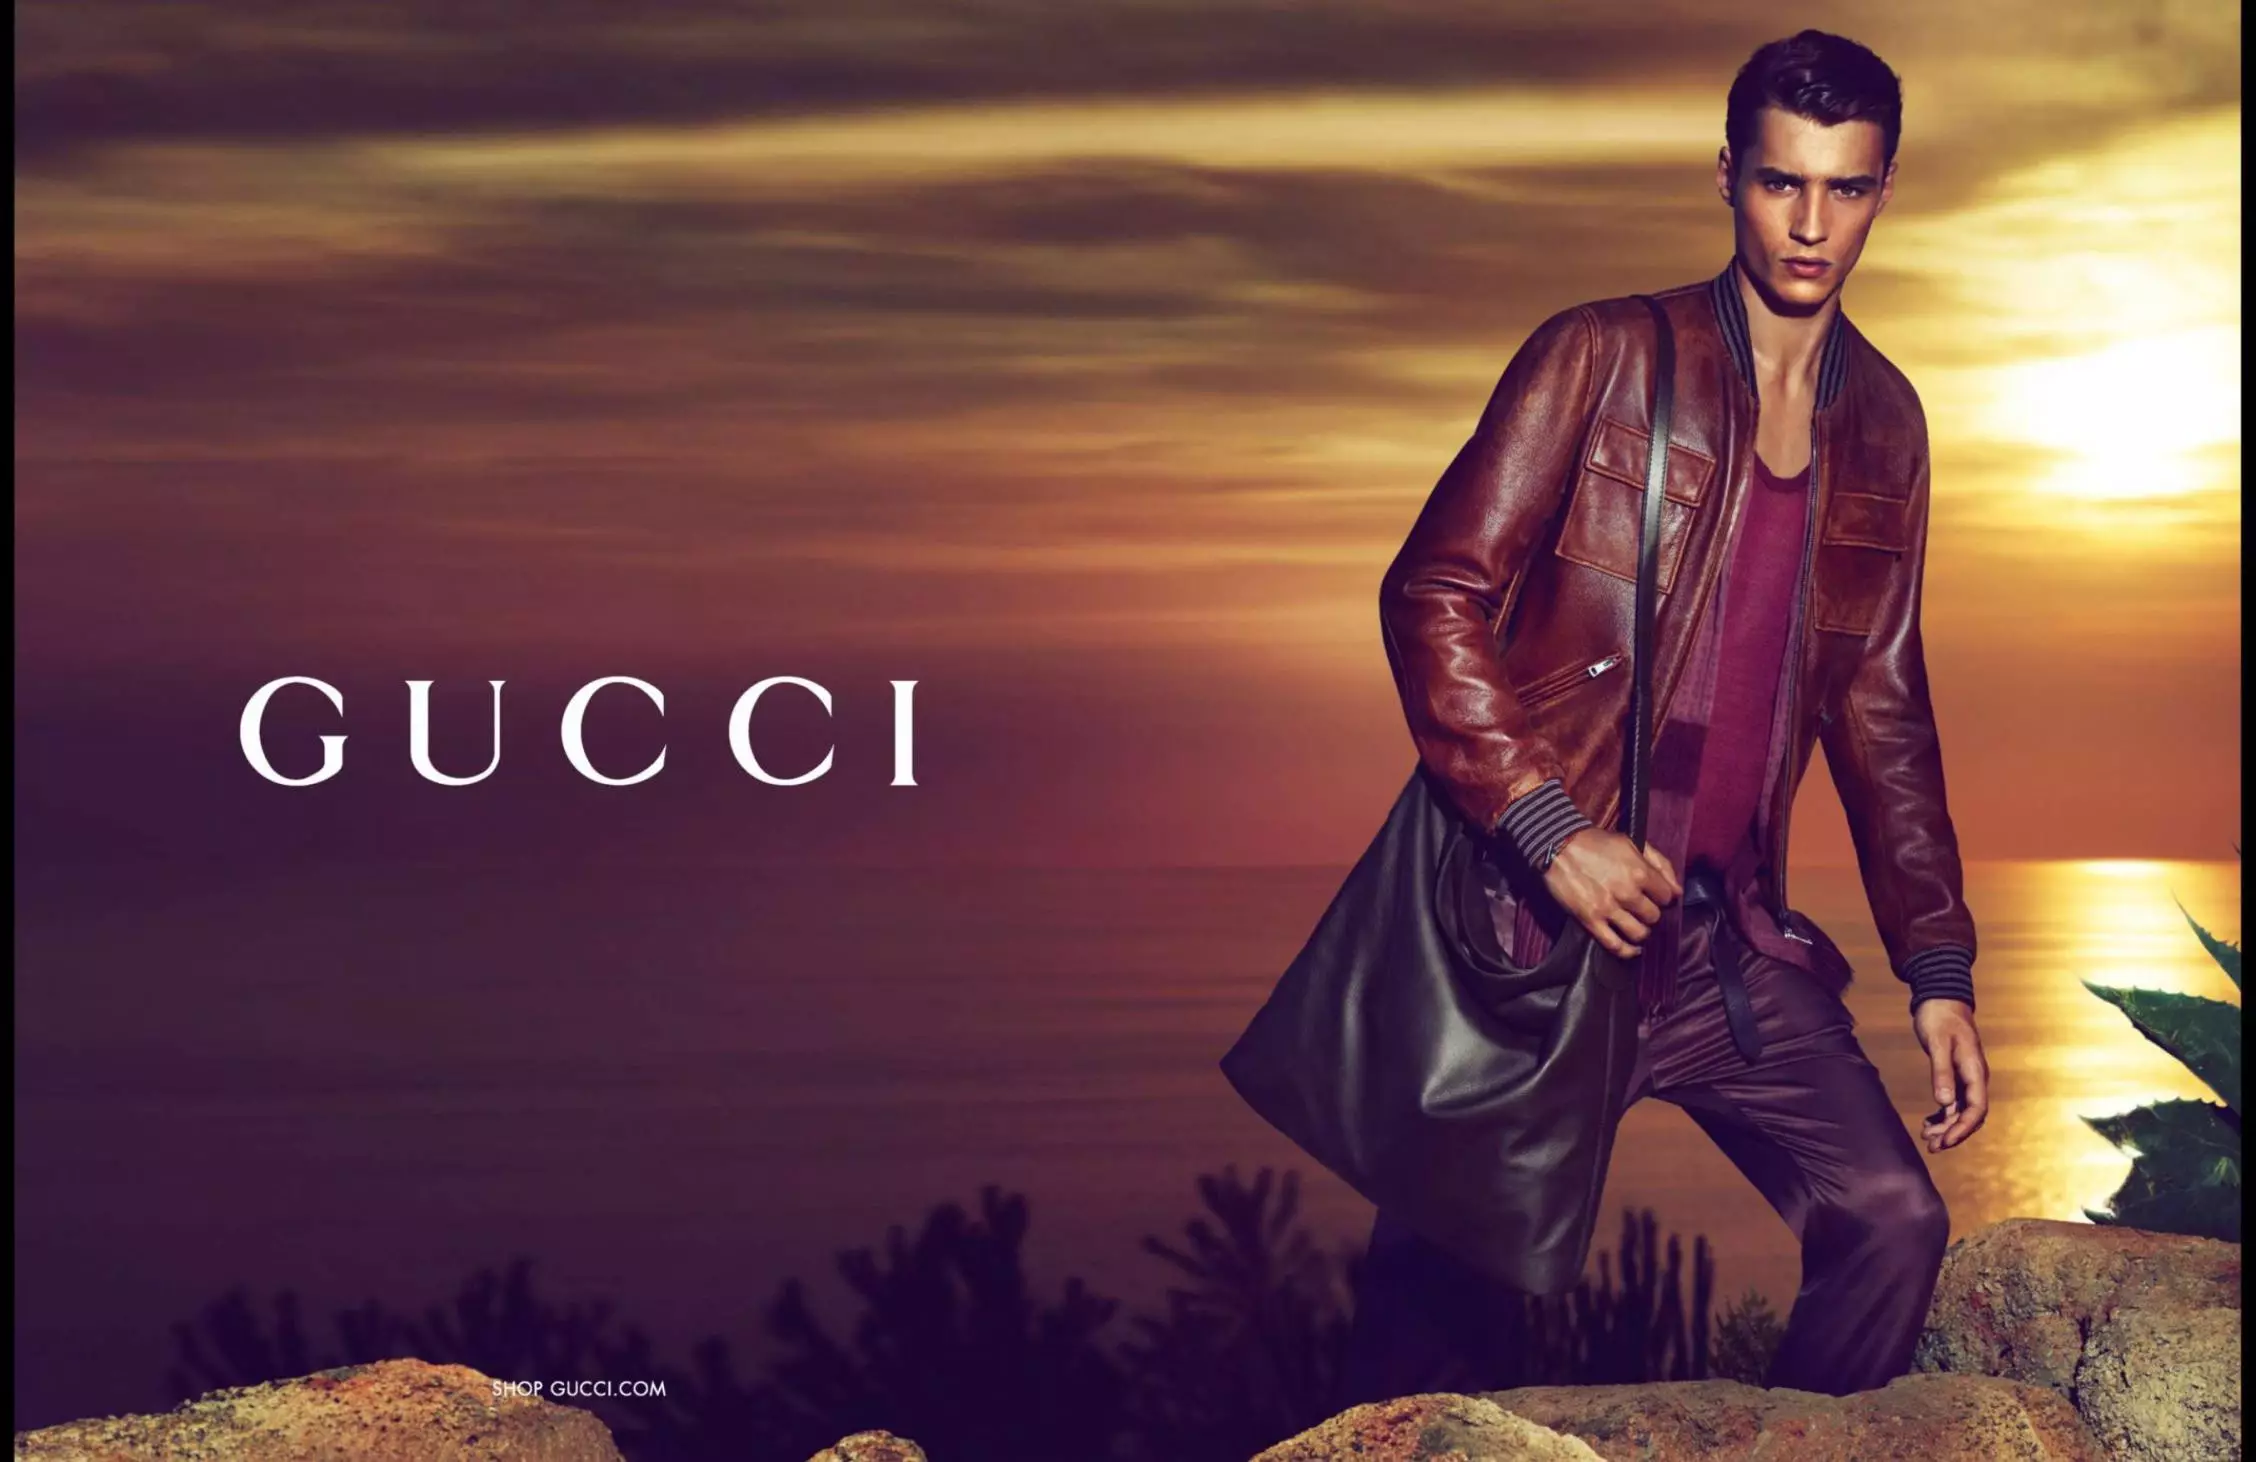 Баннер мужчине. Реклама одежды гуччи. Gucci реклама одежды. Мужчины модели. Реклама гуччи мужчины.